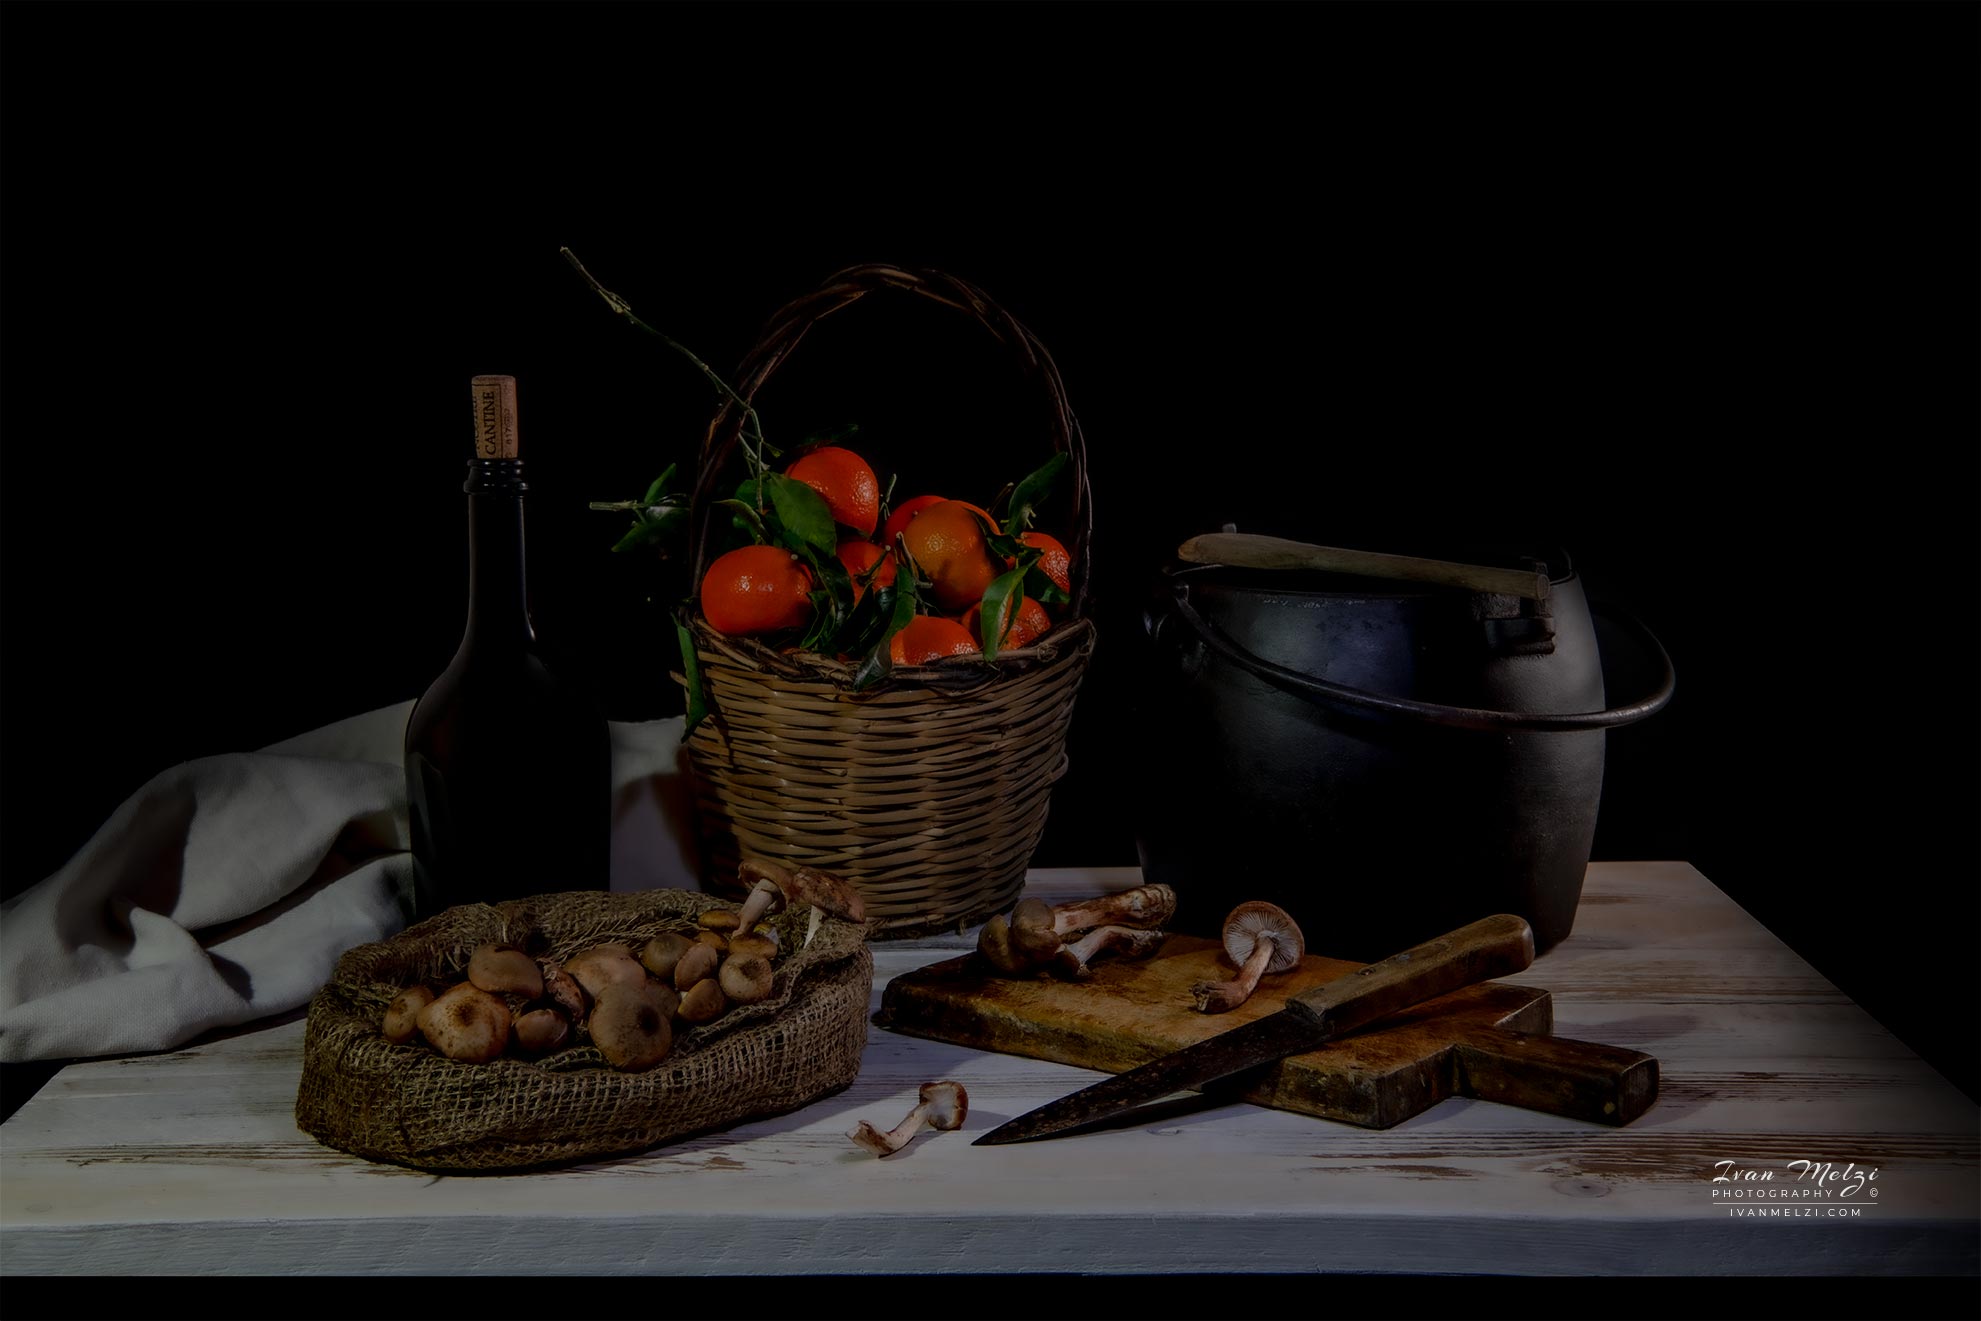 Categorie: Fine Art, Still Life & Food - Photographer: IVAN MELZI - Location: Cinisello Balsamo (MI)